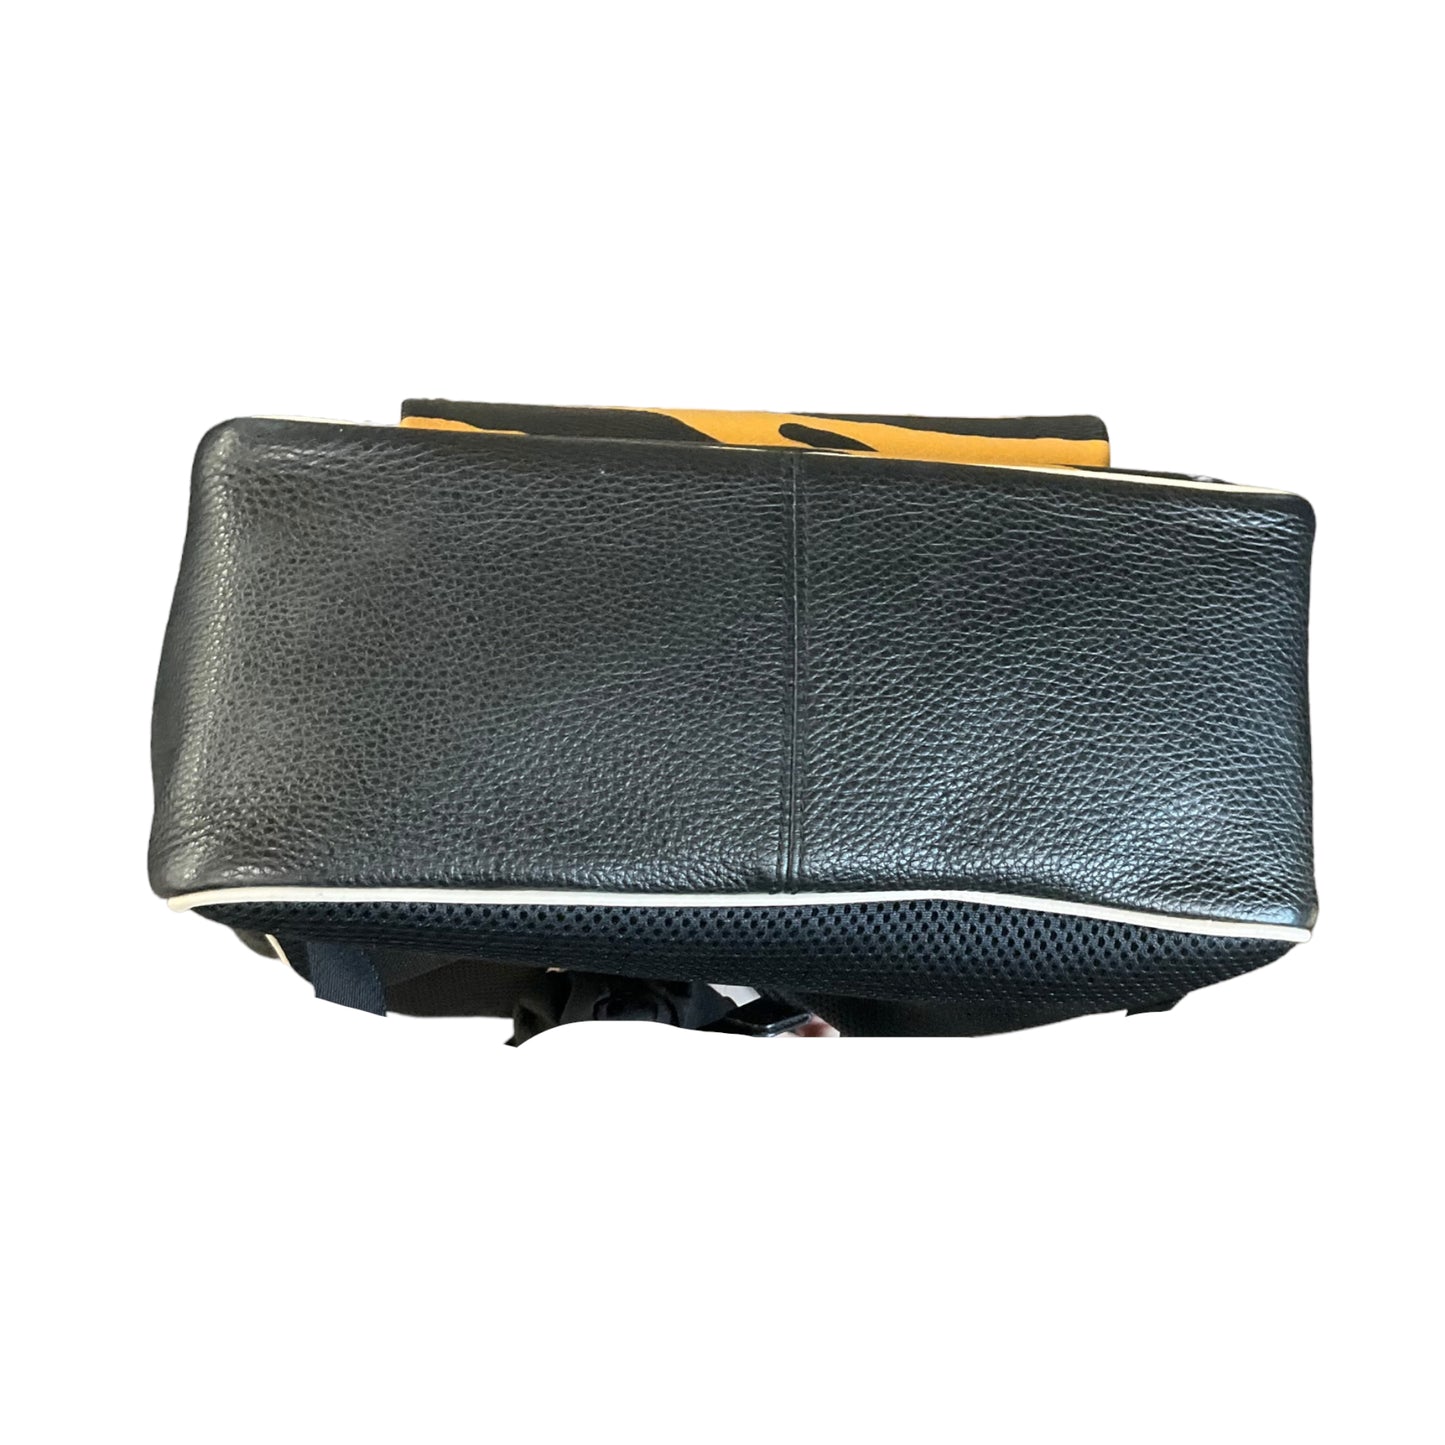 Handbag By Coach  Size: Large